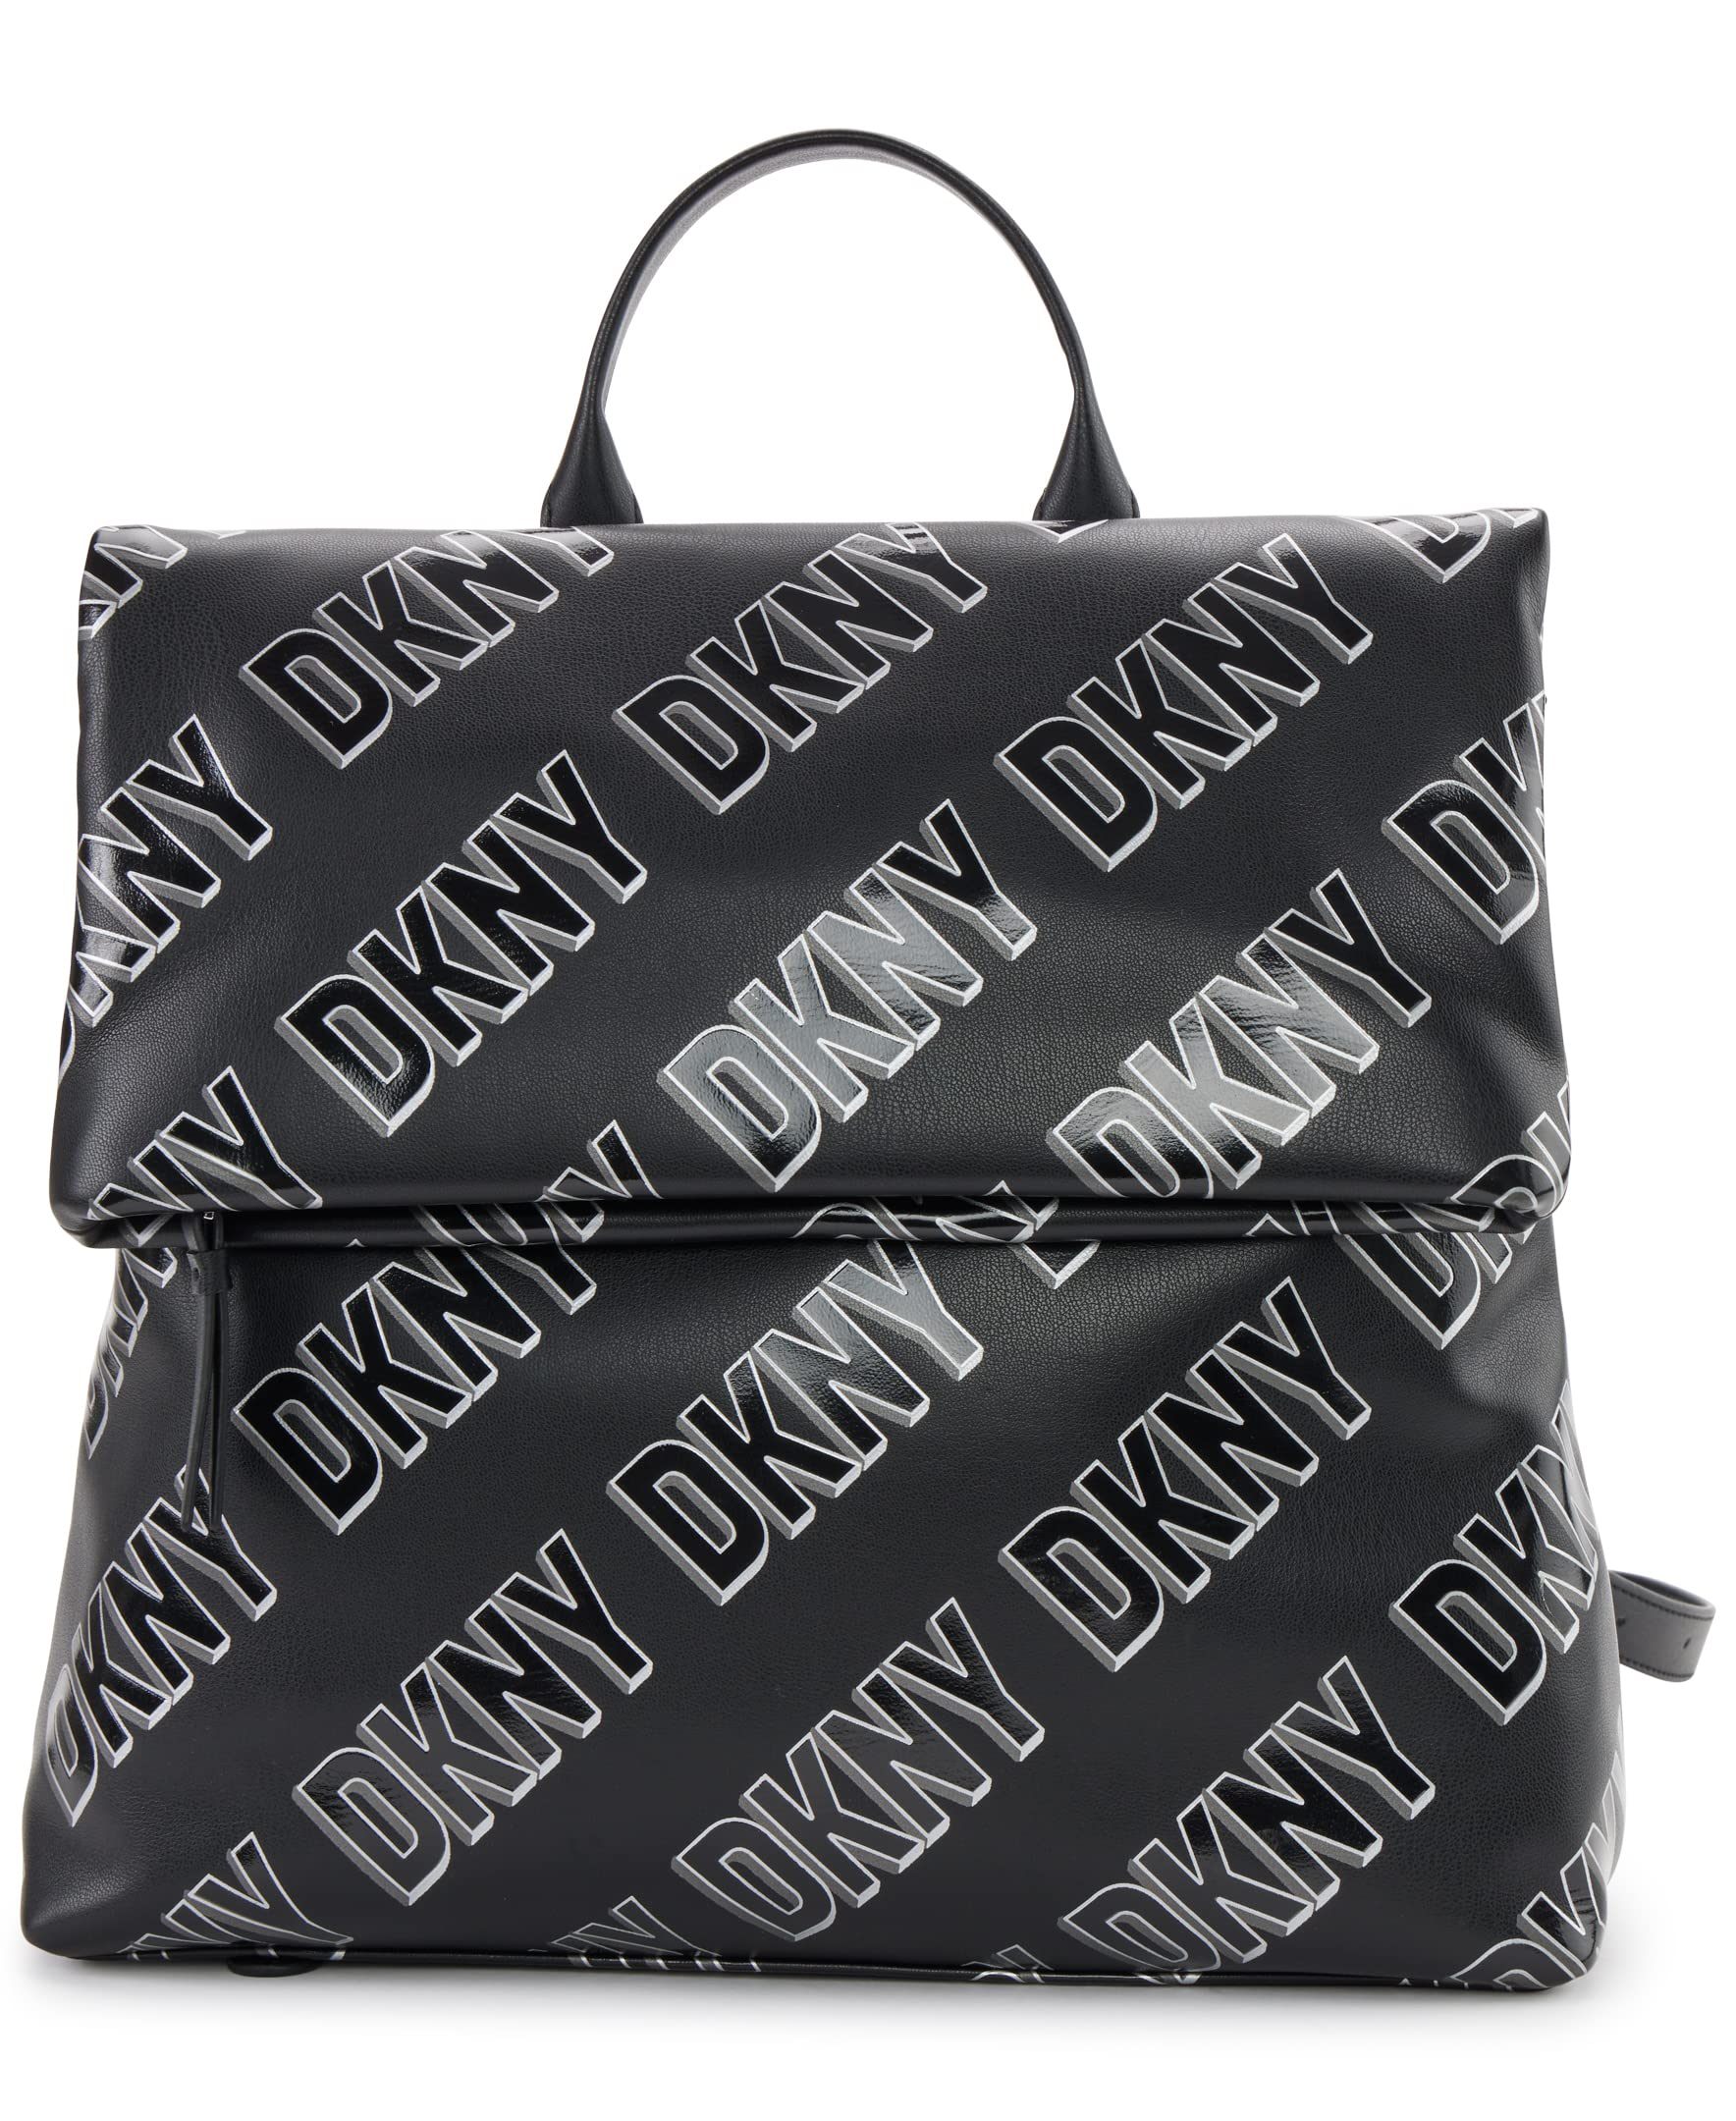 DKNY Tilly Backpack, BLK/WHT